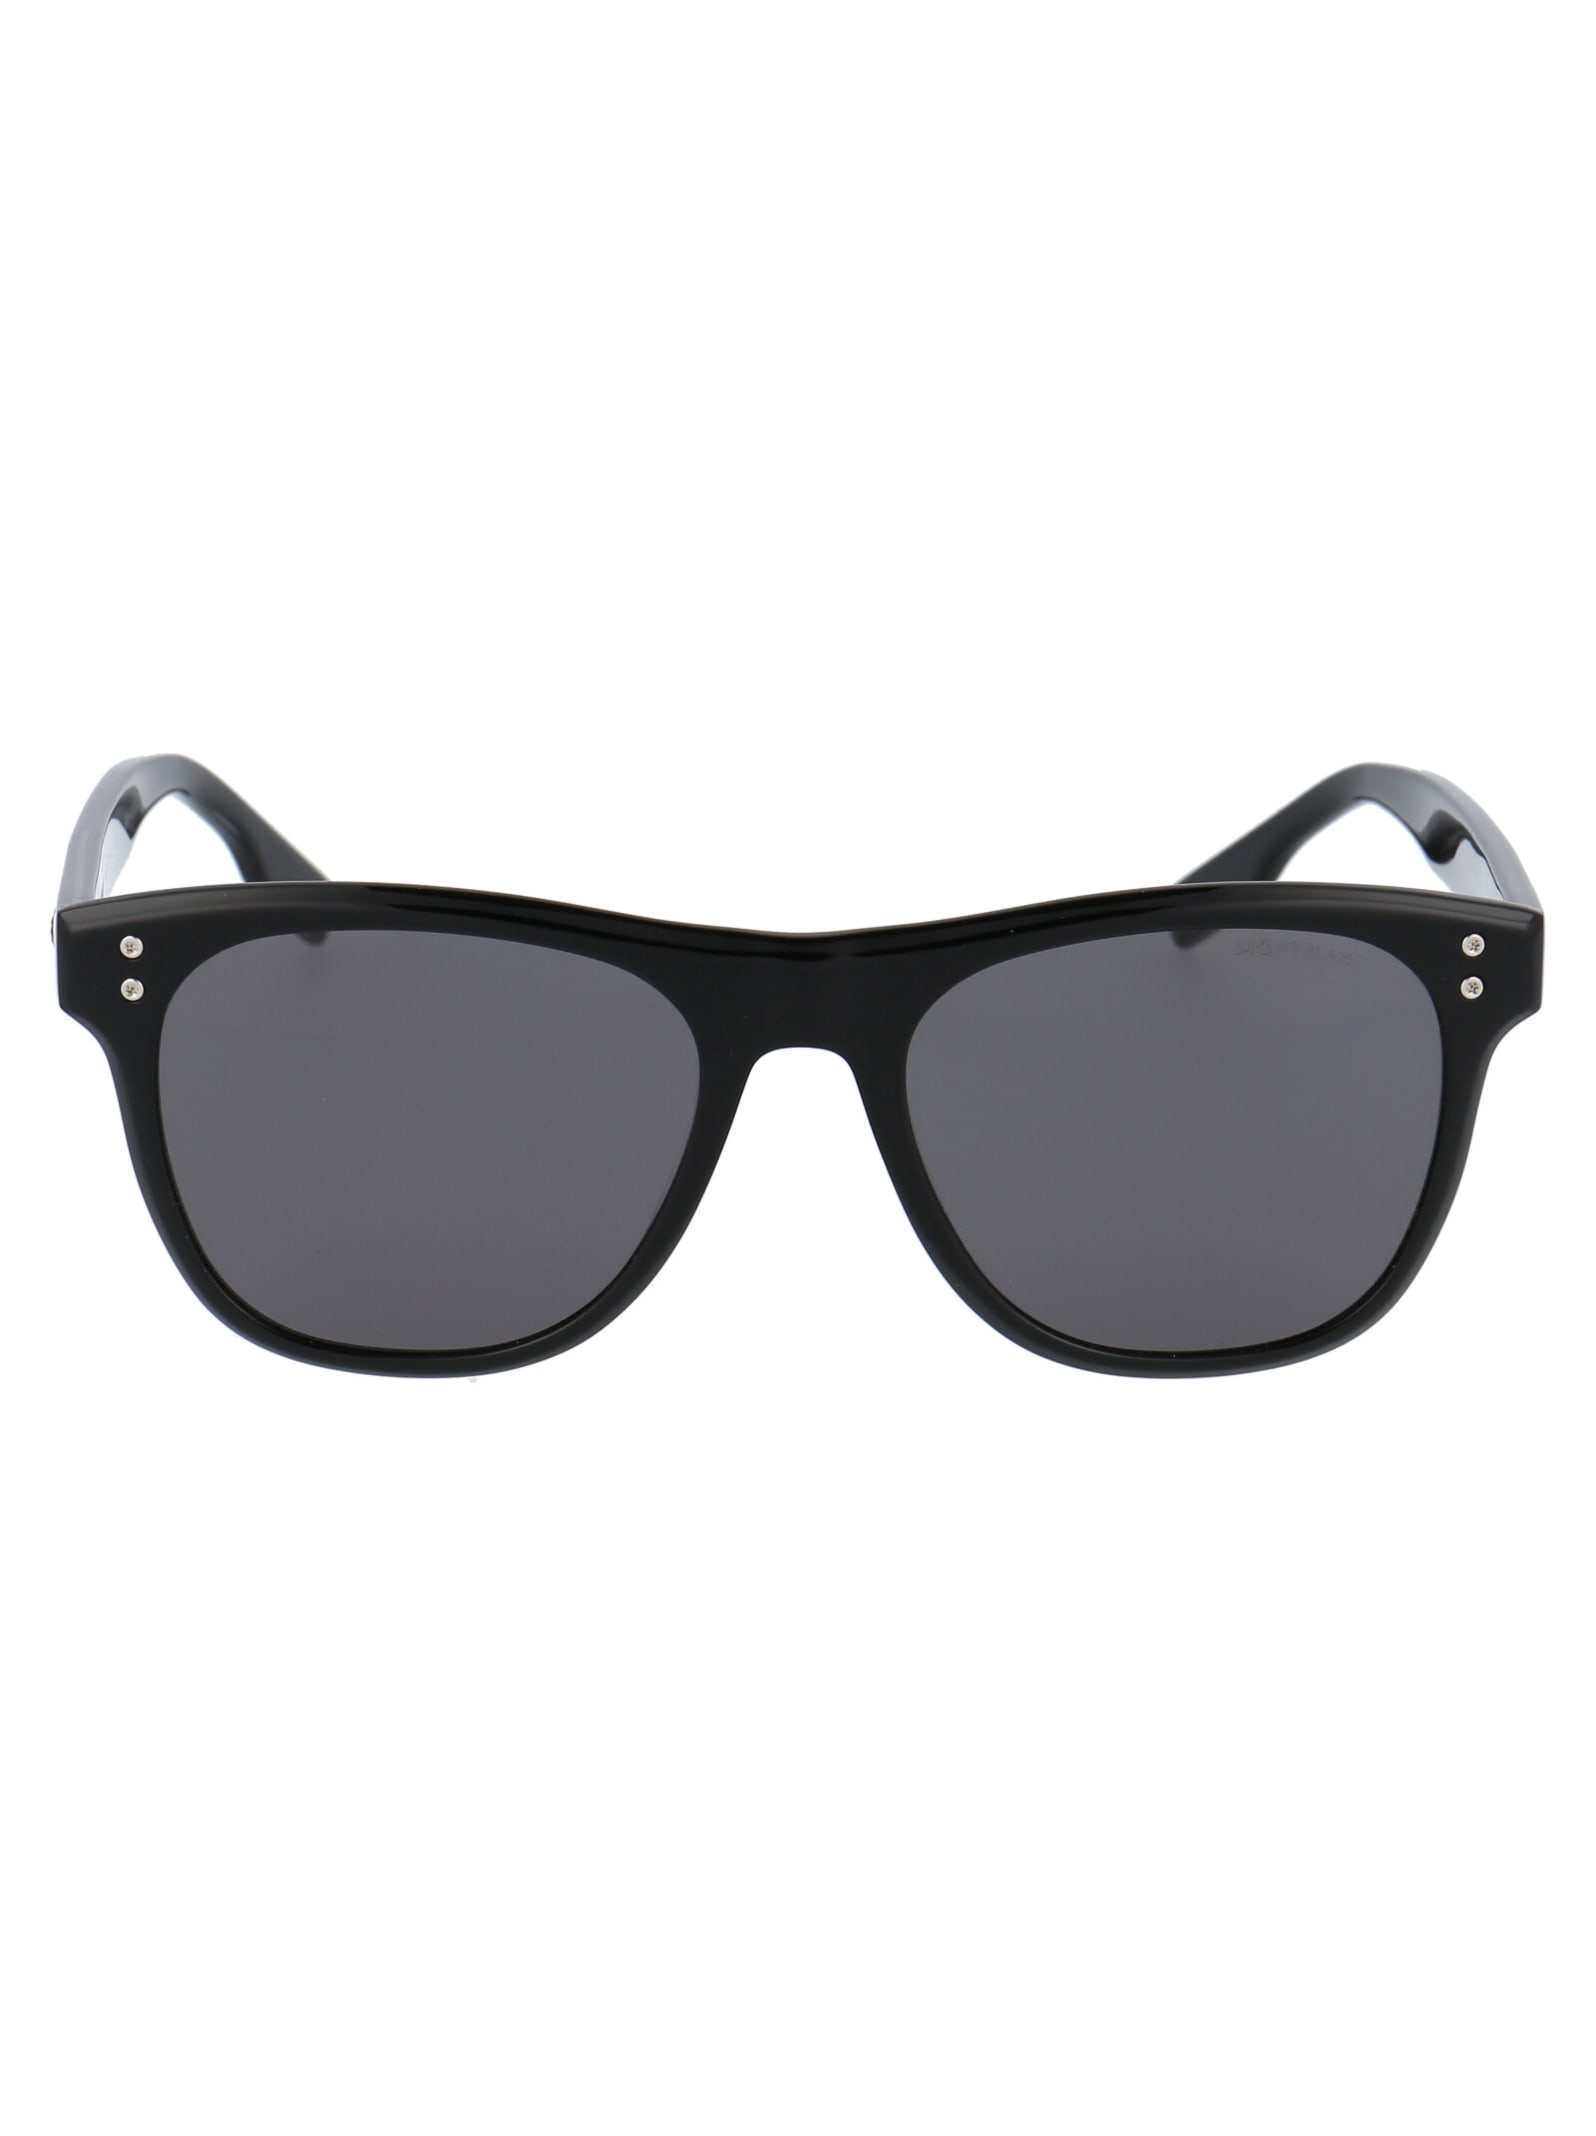 Montblanc Mb0124s Sunglasses